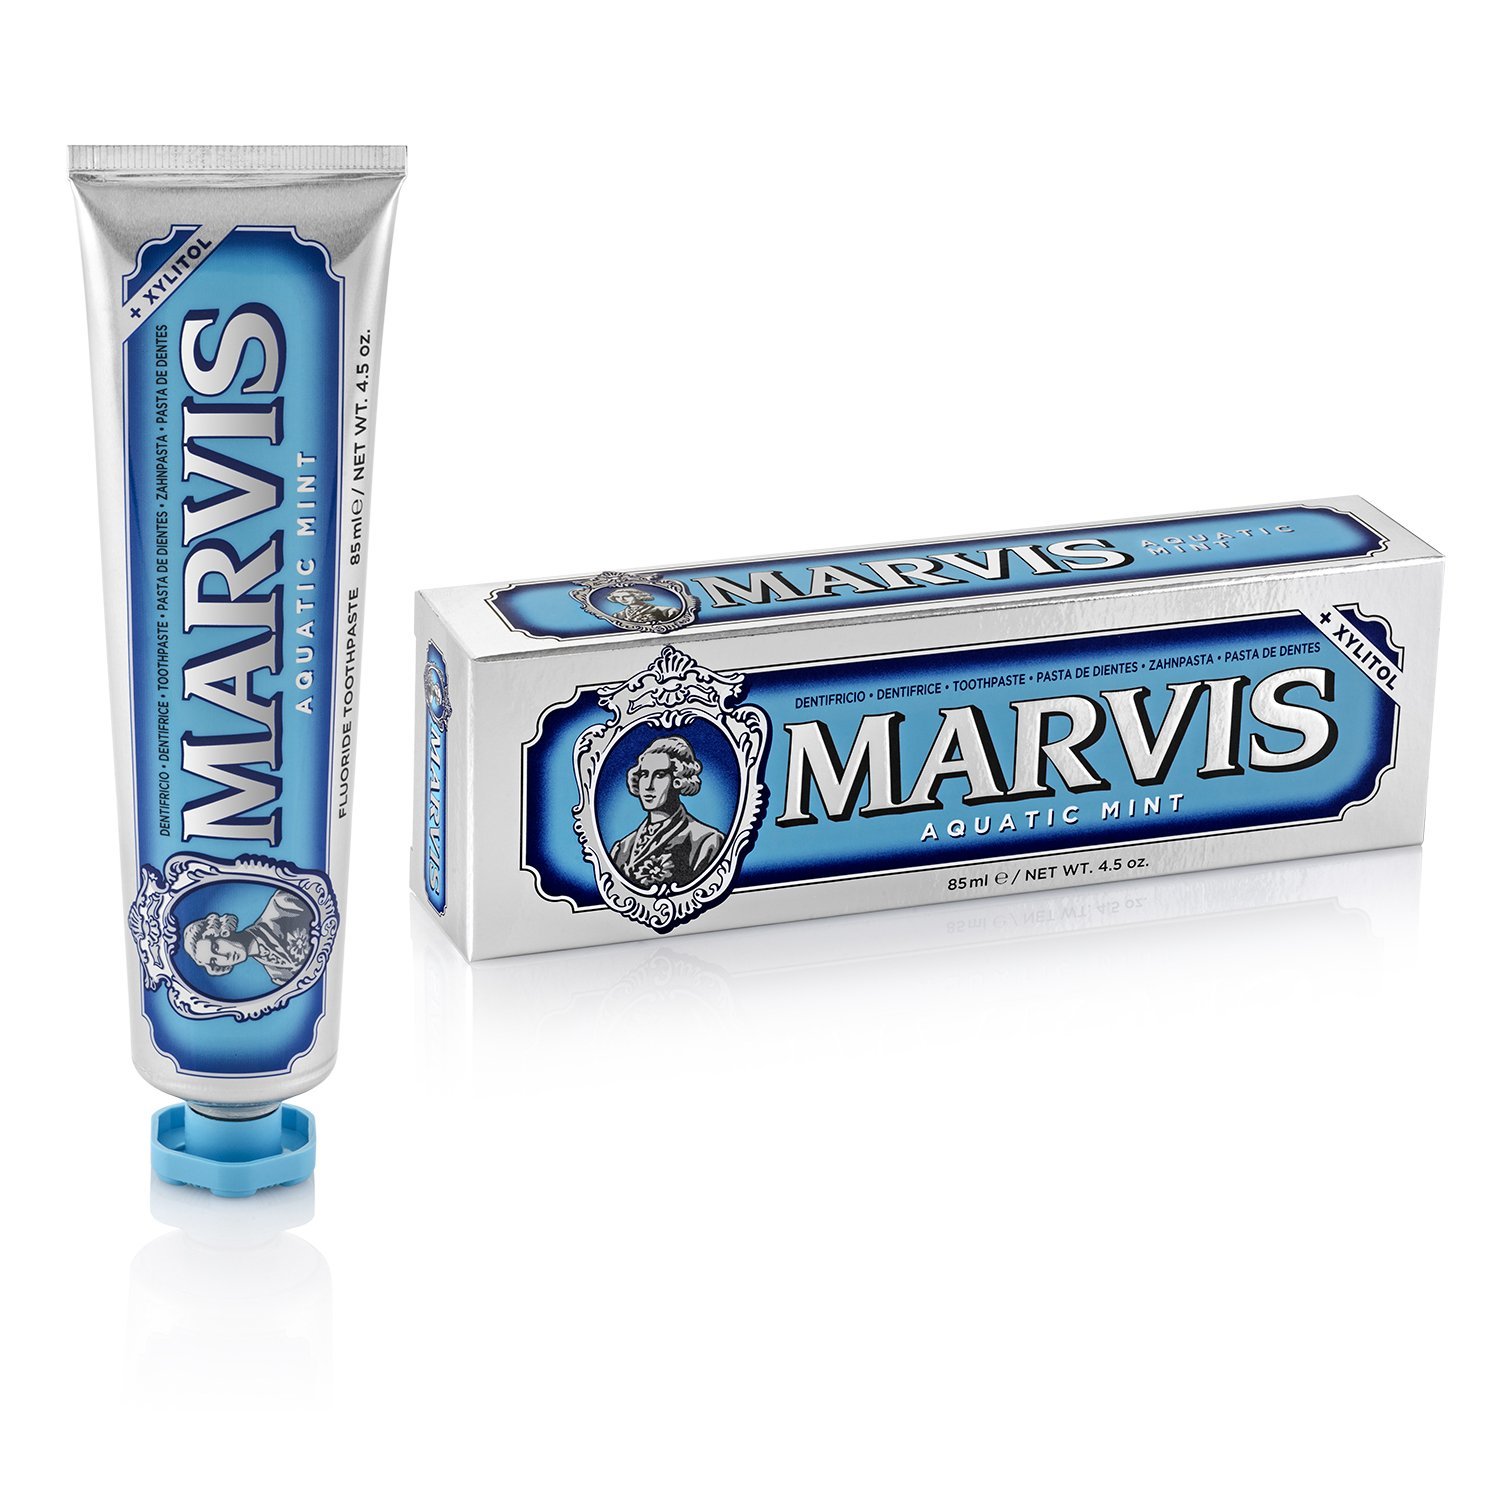 marvis-aquatic-mint-toothpaste-13